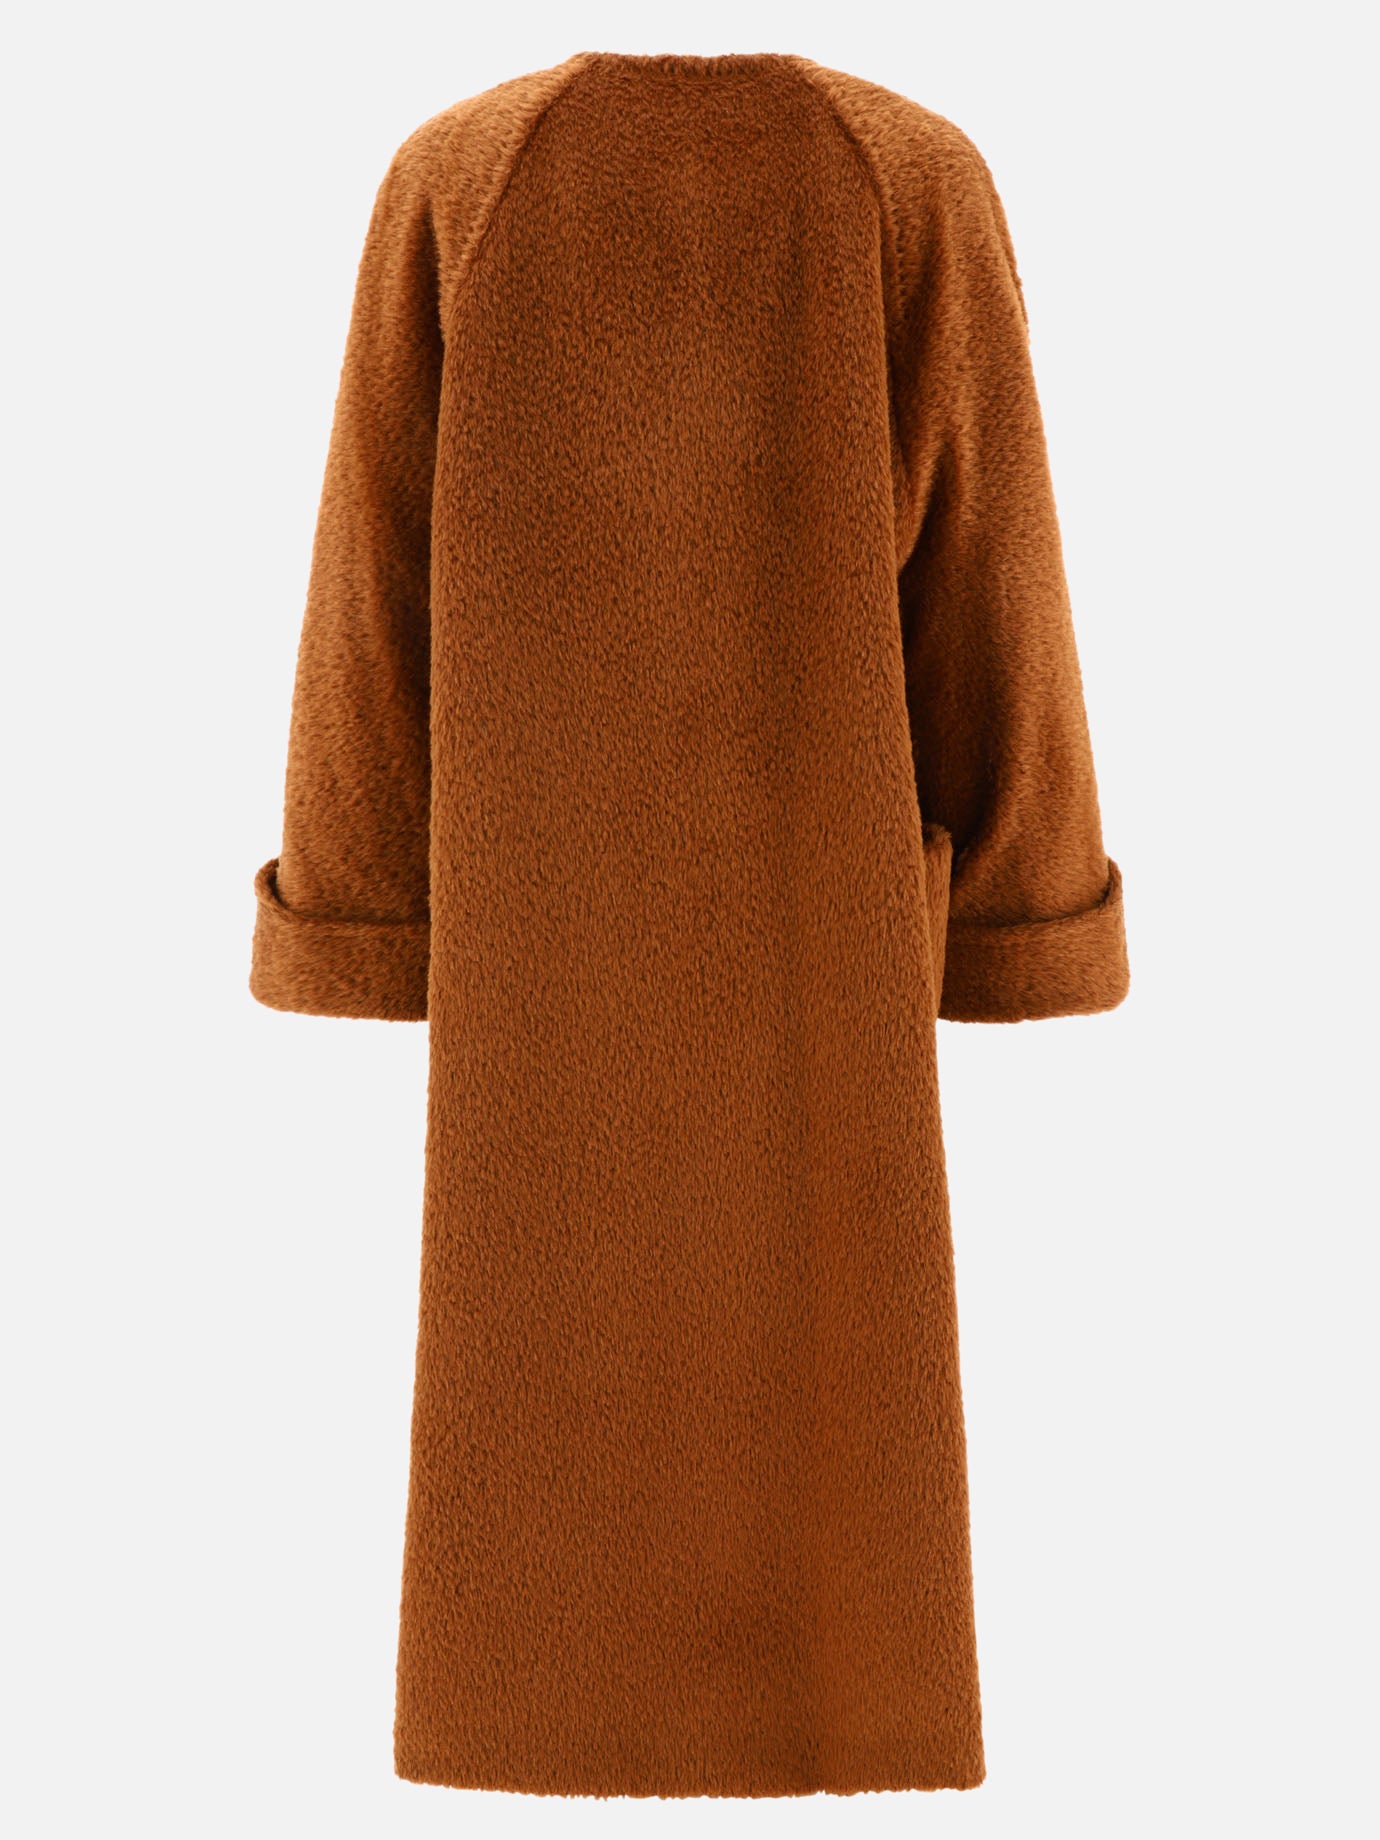 Oversized alpaca and wool coat